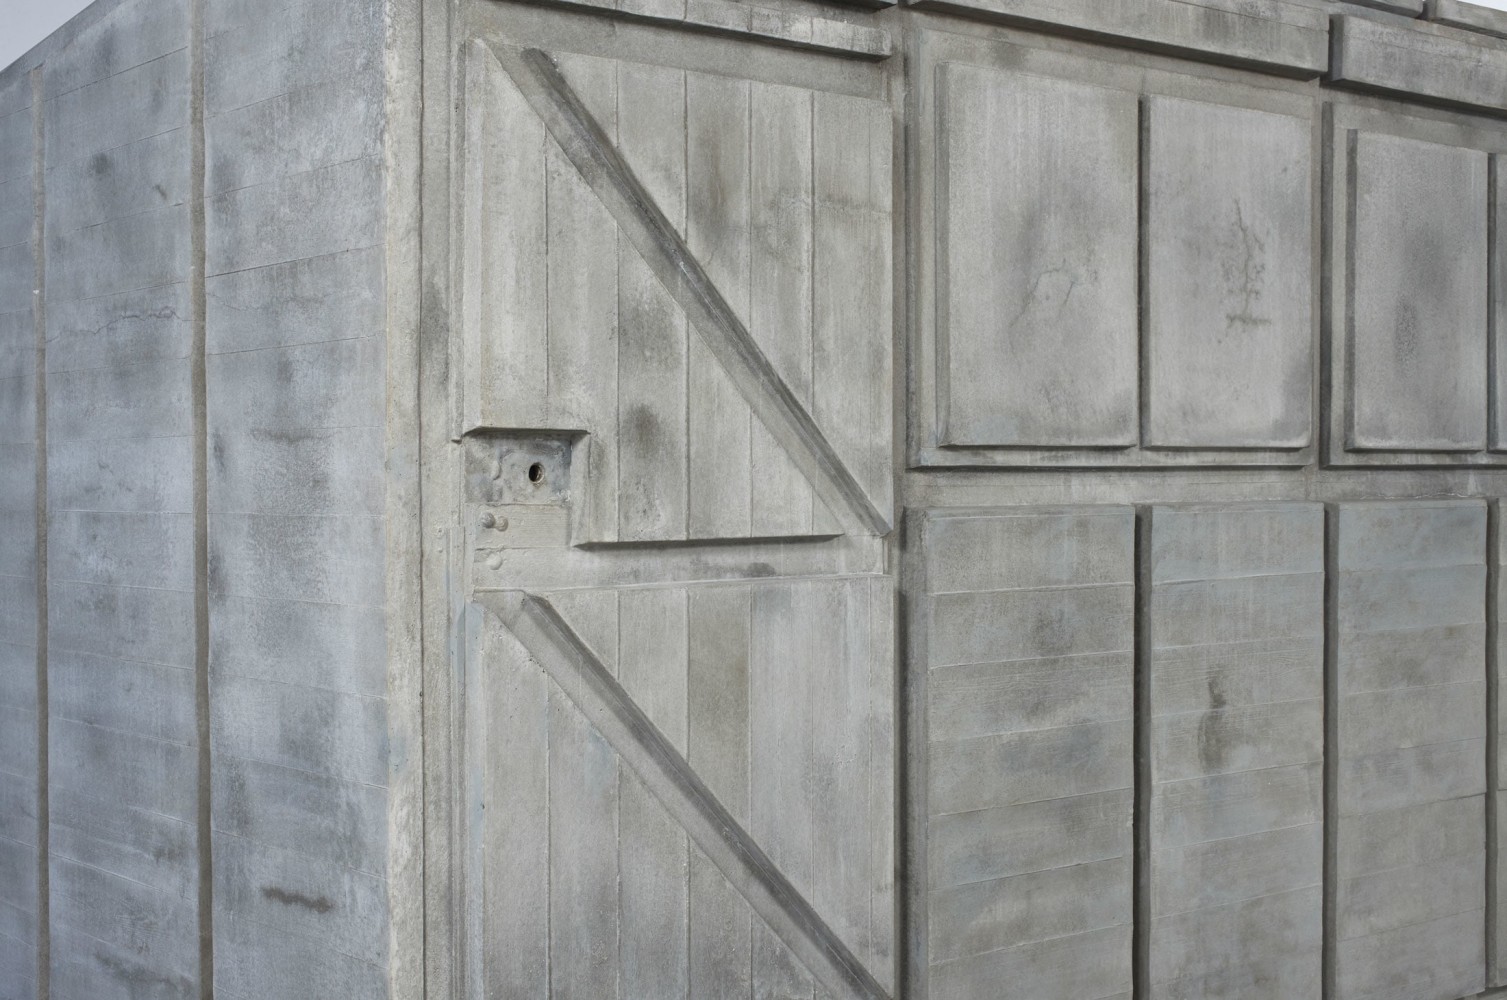 Rachel Whiteread
Detached III, 2012
​Detail
Concrete and steel
77 1/8 x 67 11/16 x 115 11/16 inches&amp;nbsp;
(196 x 172 x 294 cm)